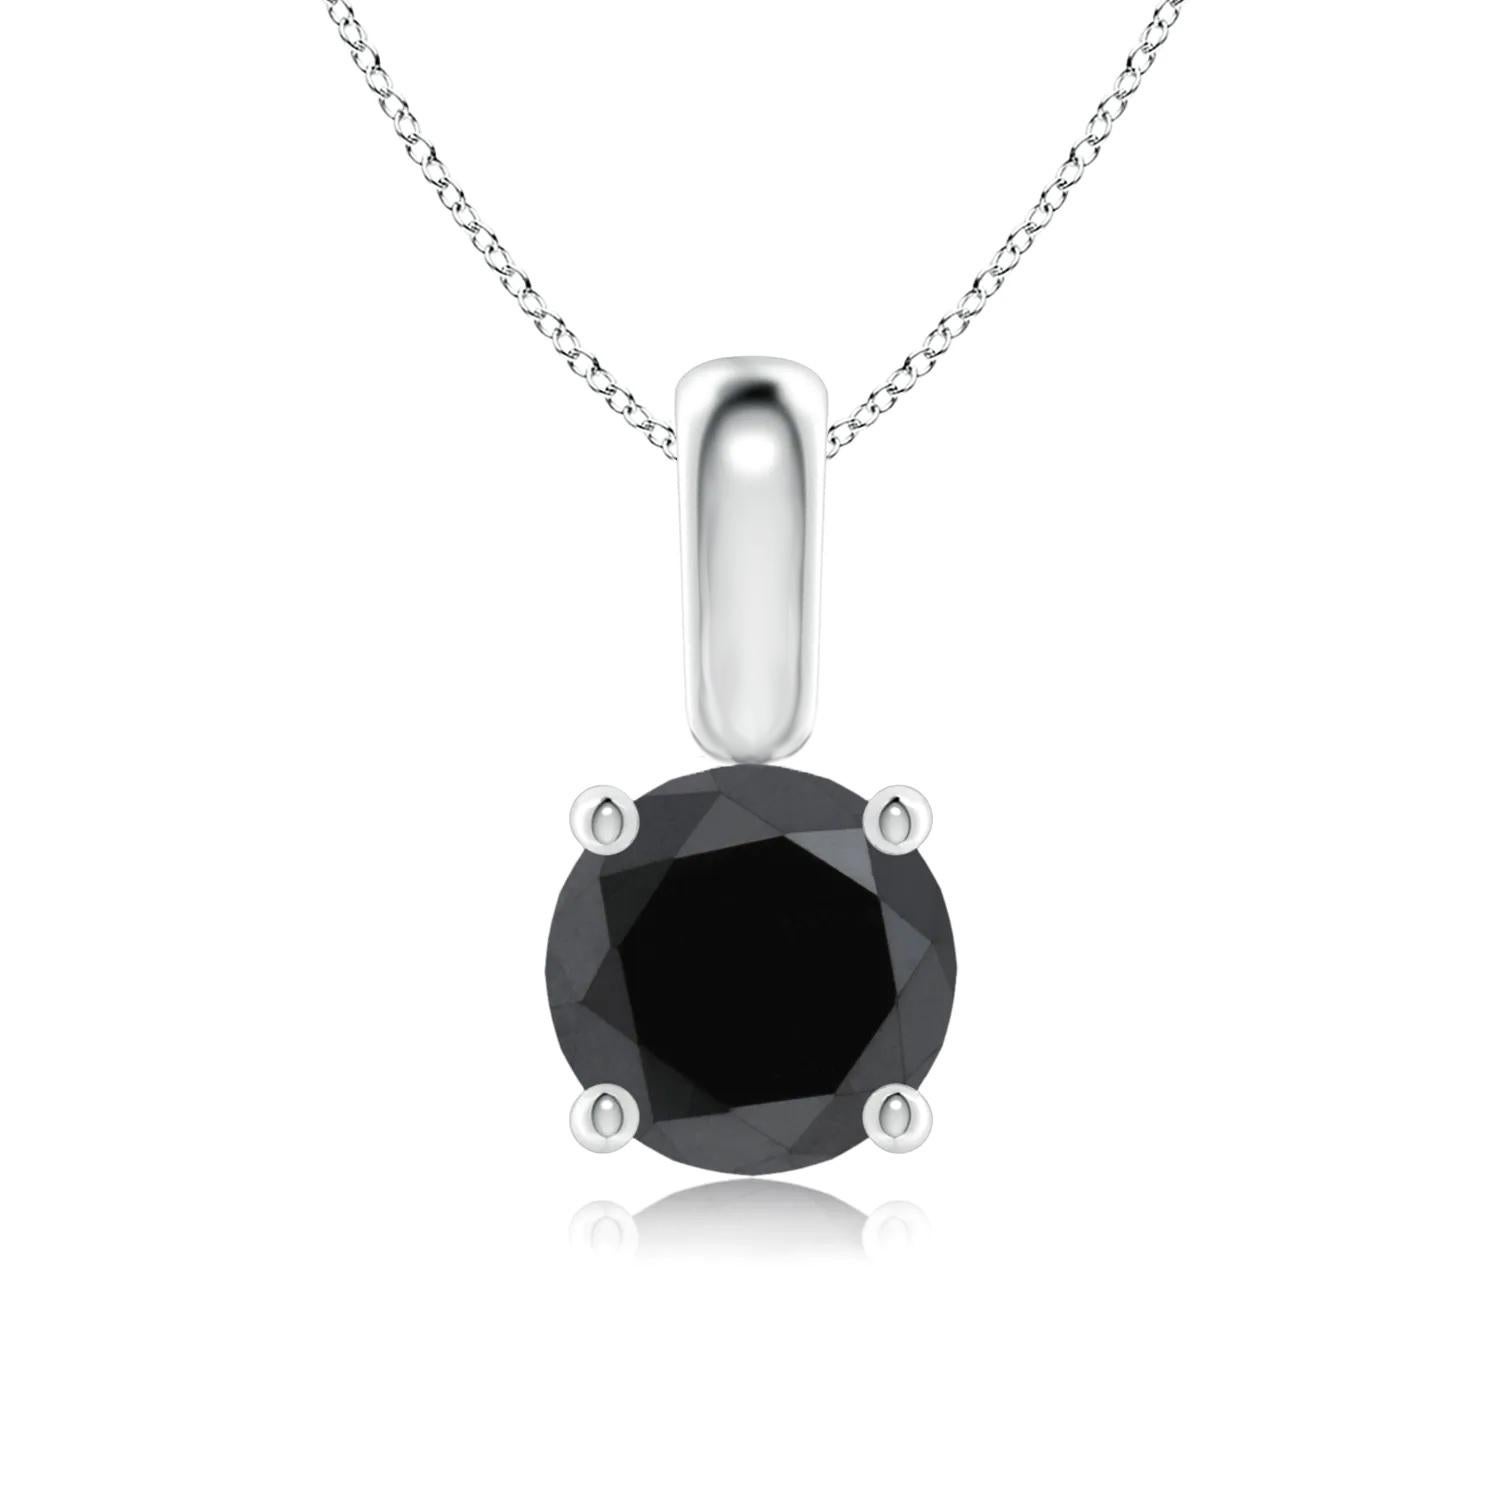 Contemporary 1.29 Carat Round Black Diamond Solitaire Pendant Necklace in 14K White Gold